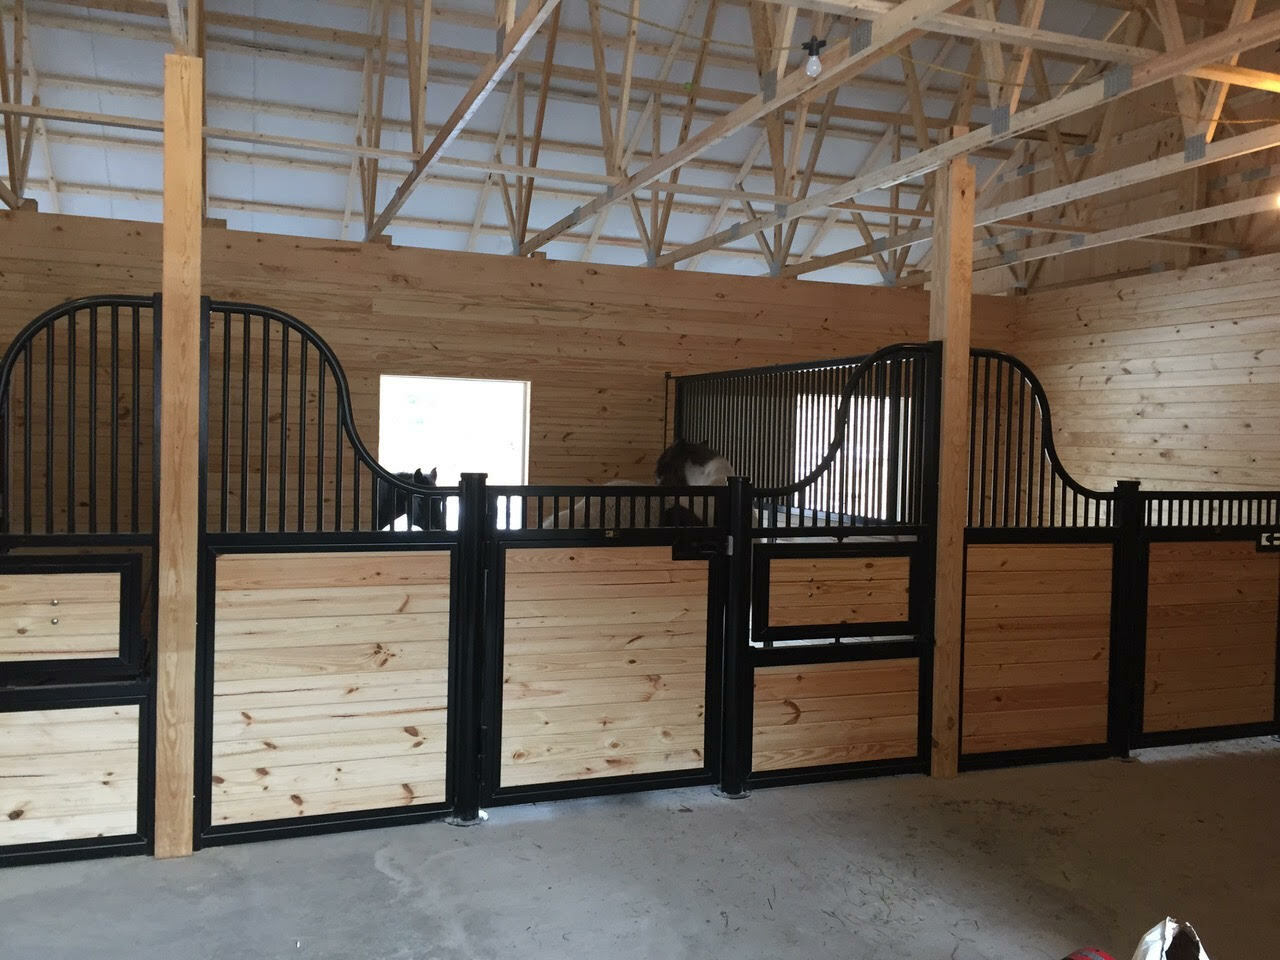 Equestrian barn interior